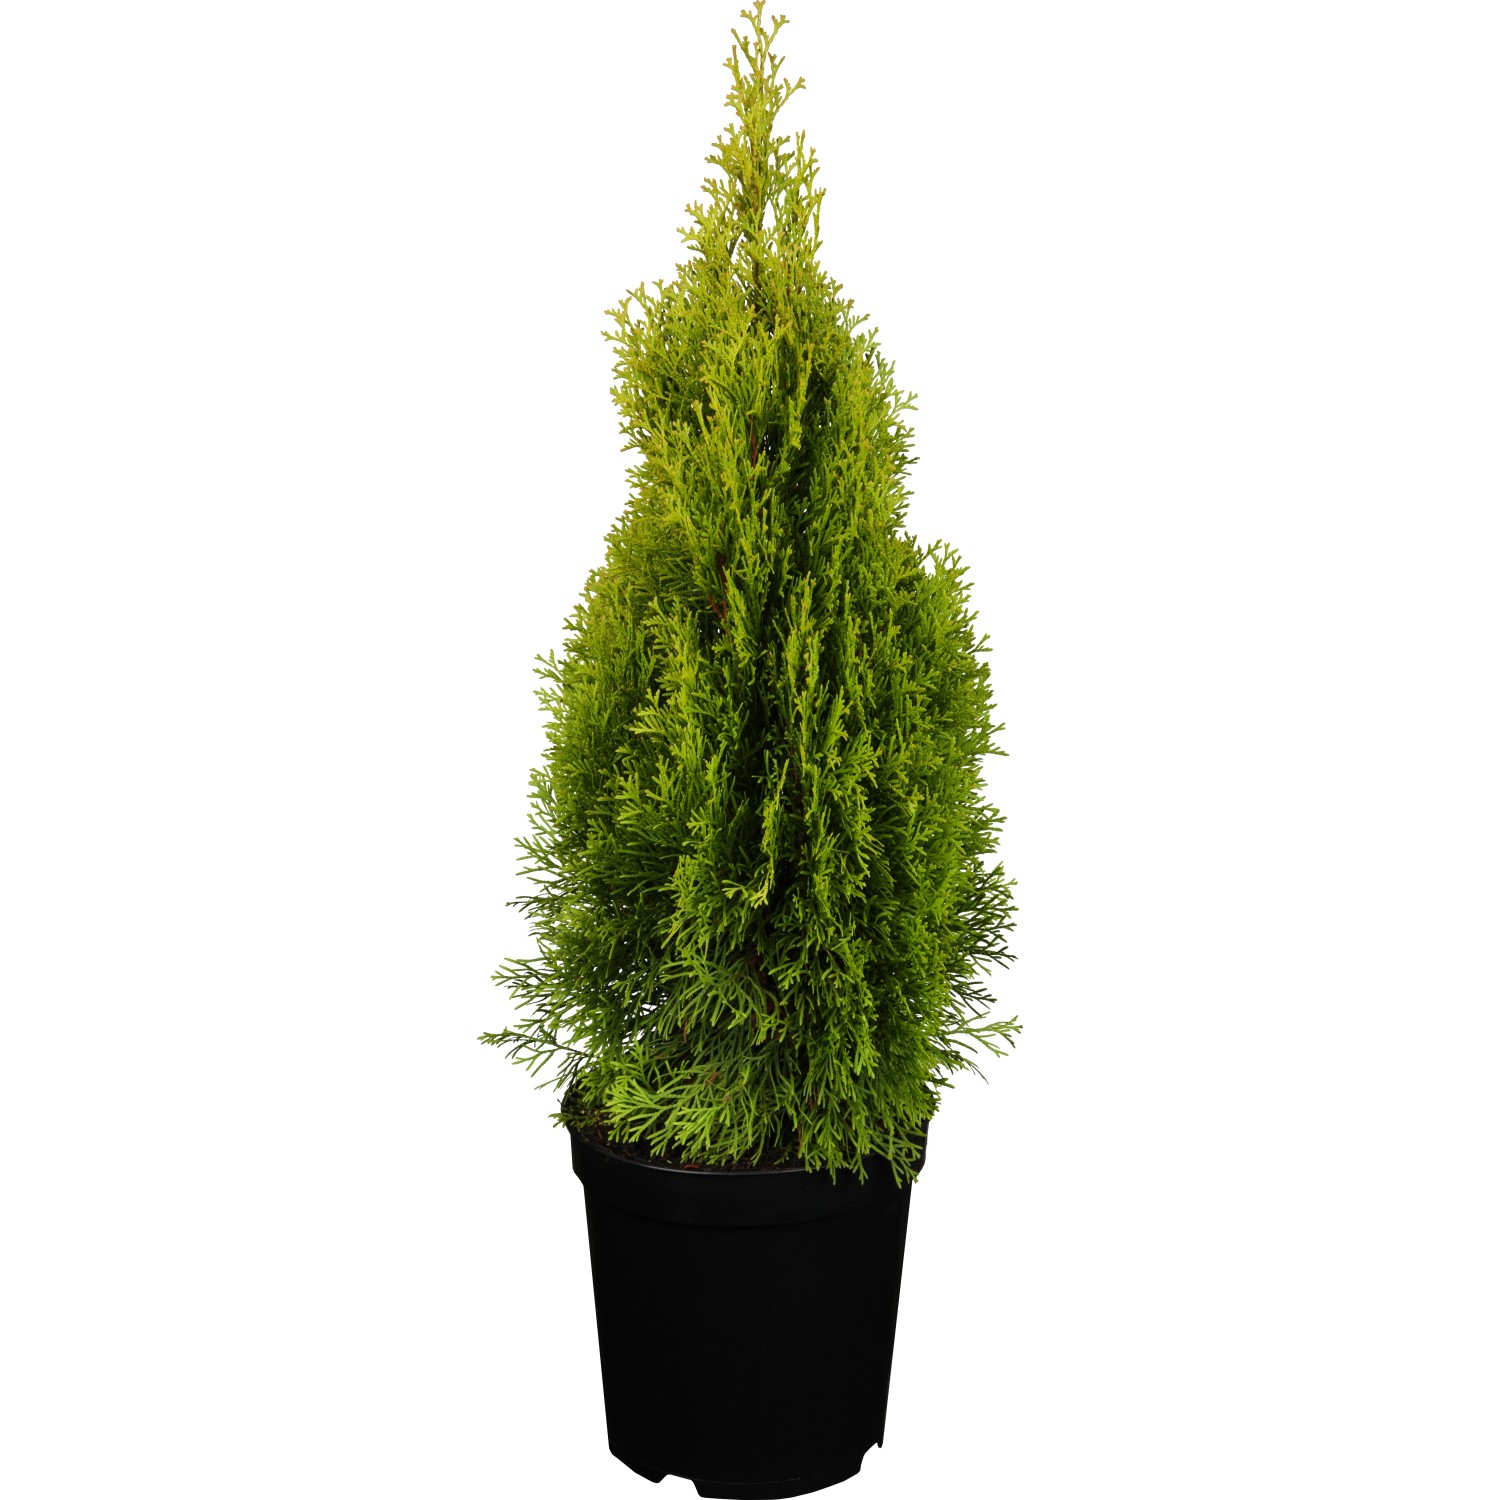 Lebensbaum Golden Smaragd Höhe ca. 50 - 60 cm Topf ca. 5 l Thuja occidentalis